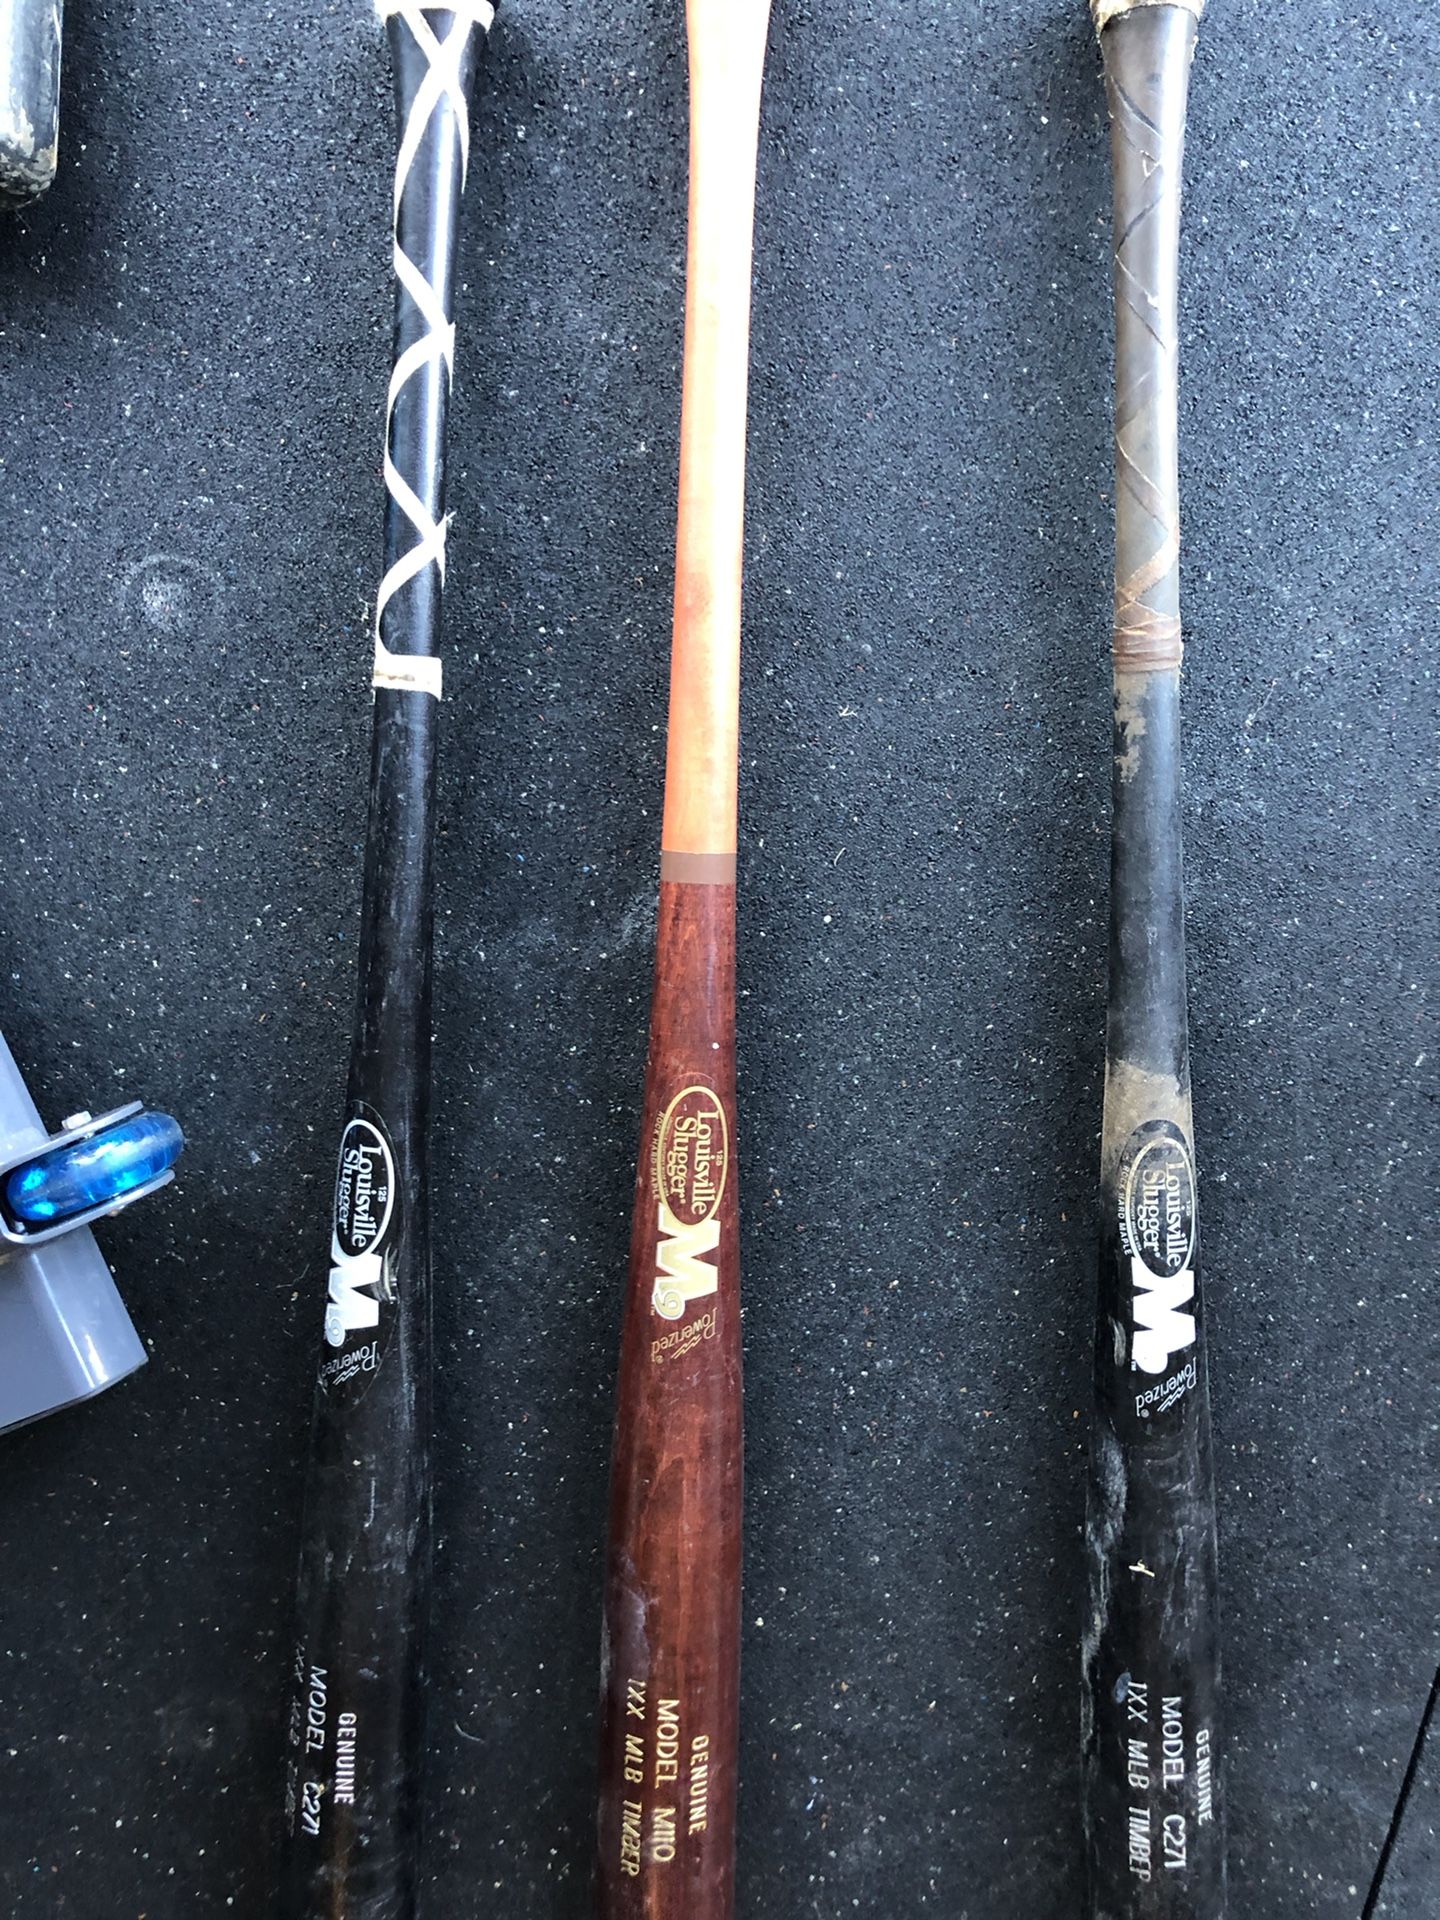 Three quality wooden baseball bats 80 bucks each or 140 for all